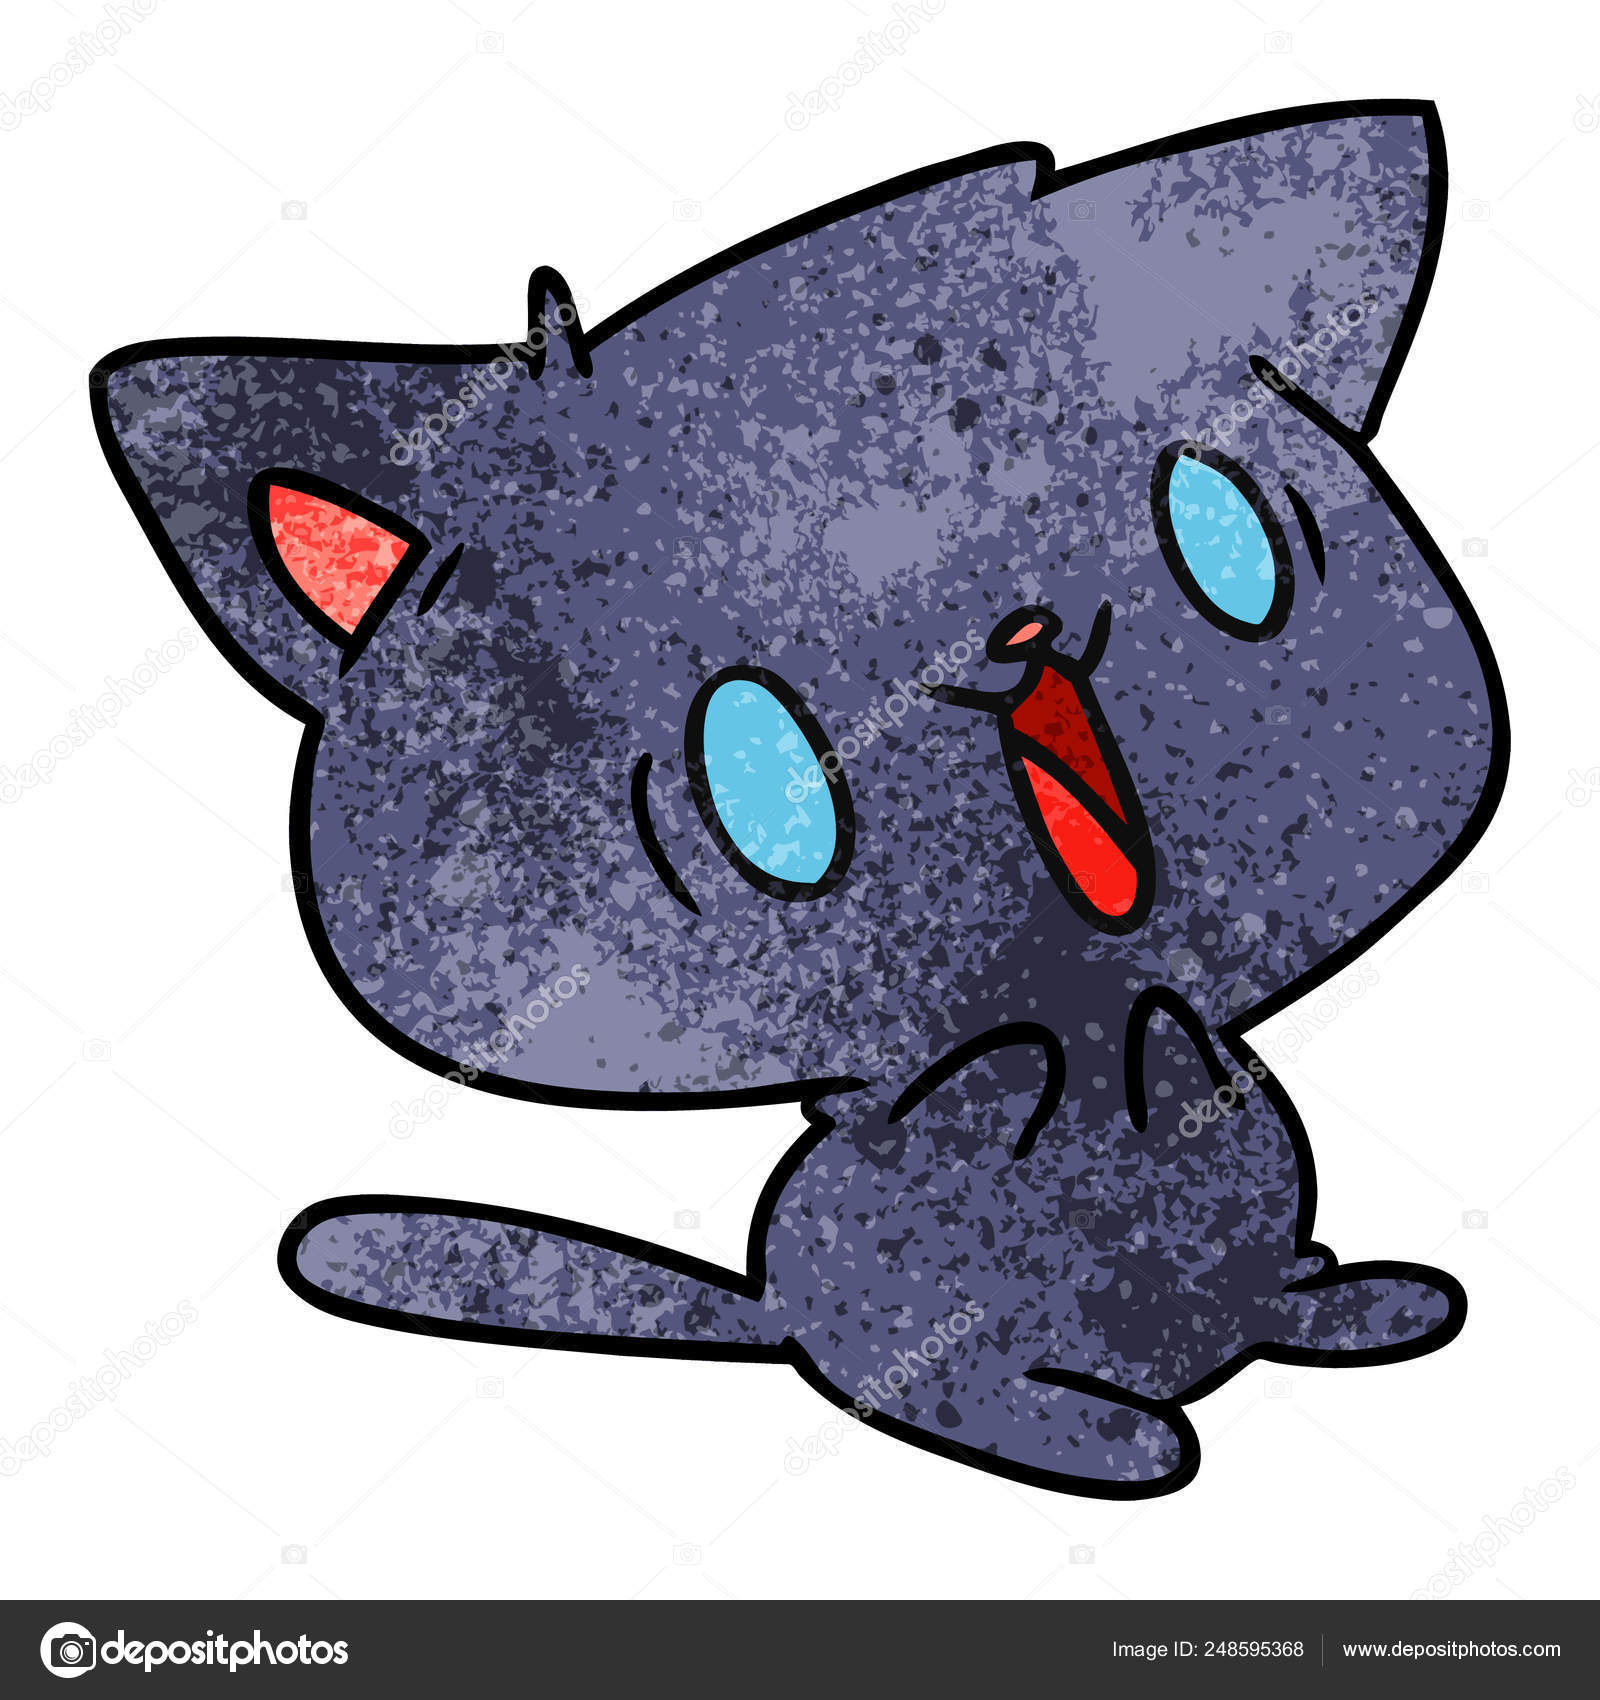 Desenho De Gato Animal Animado Doodle Kawaii Anime Página Para